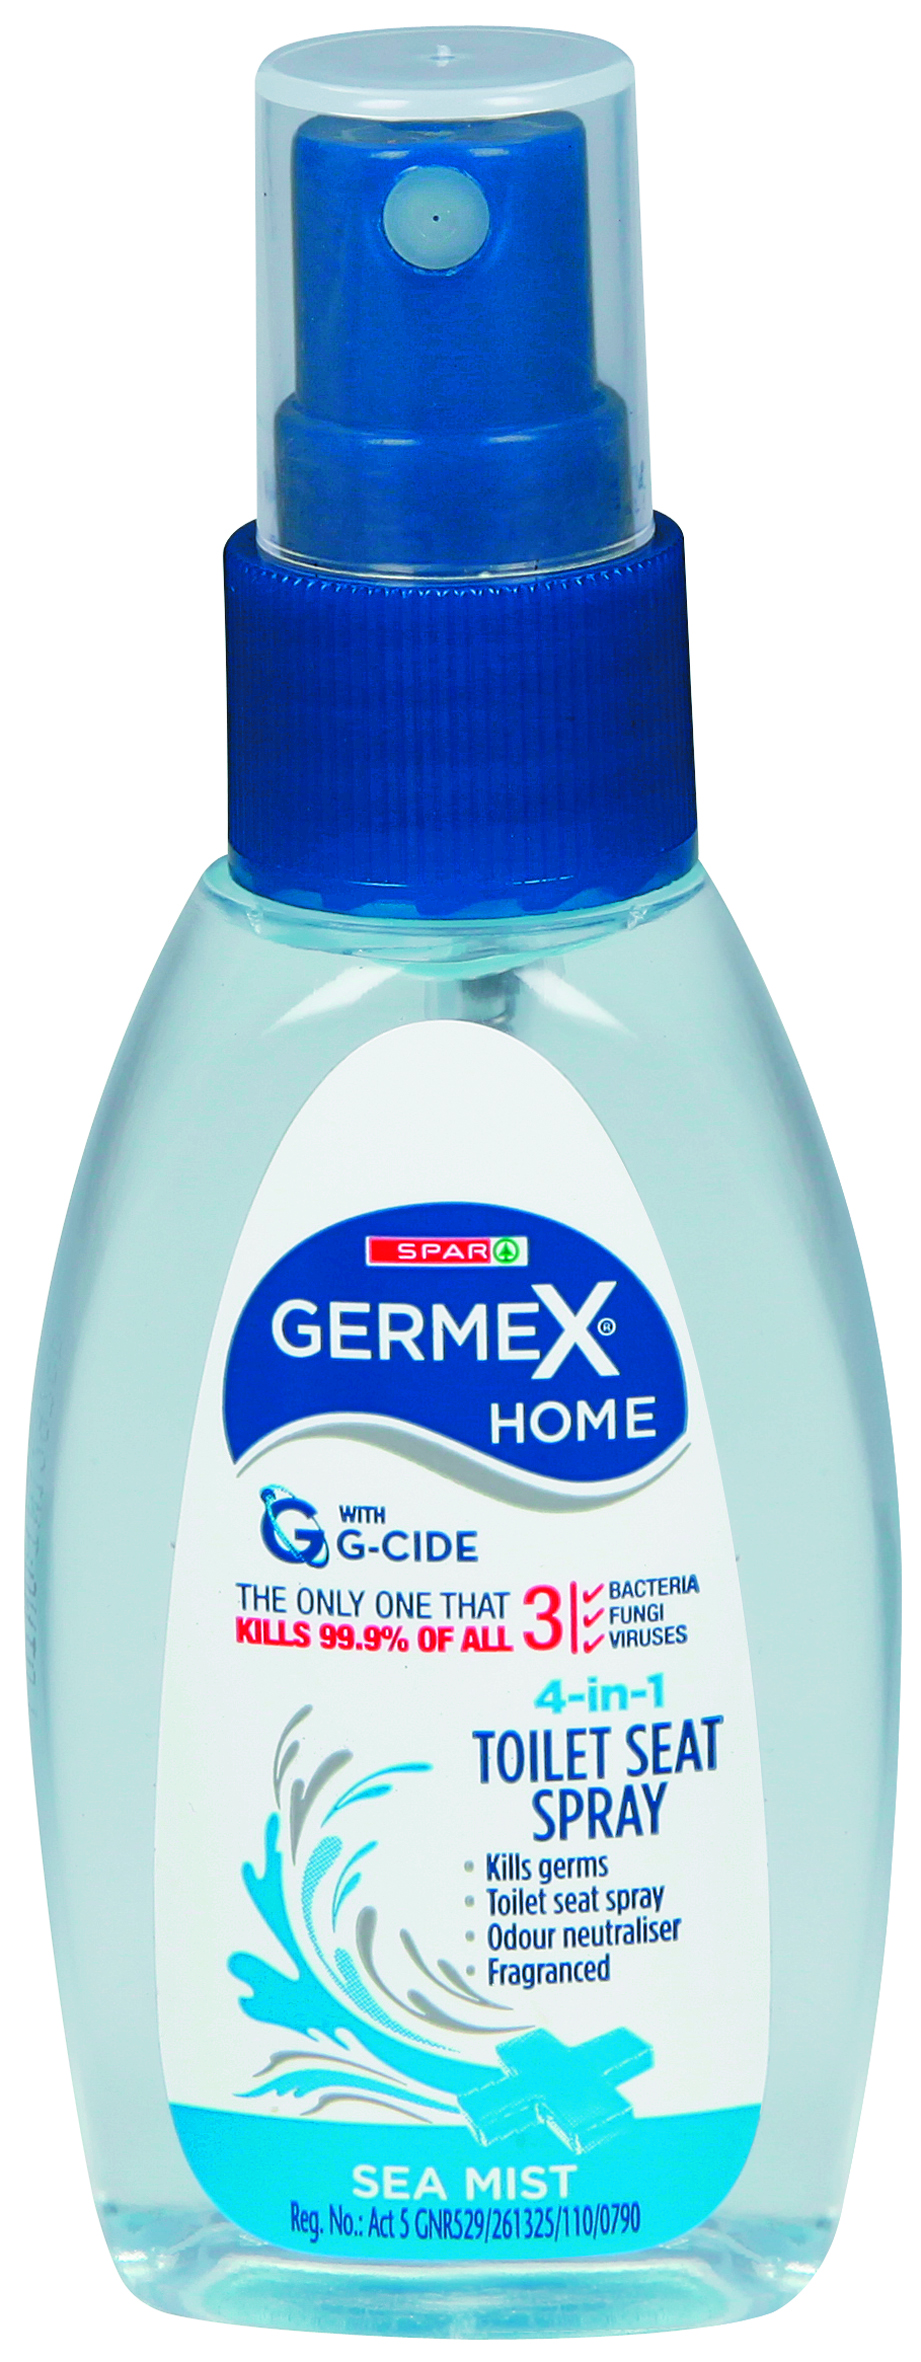 germex toilet seat spray